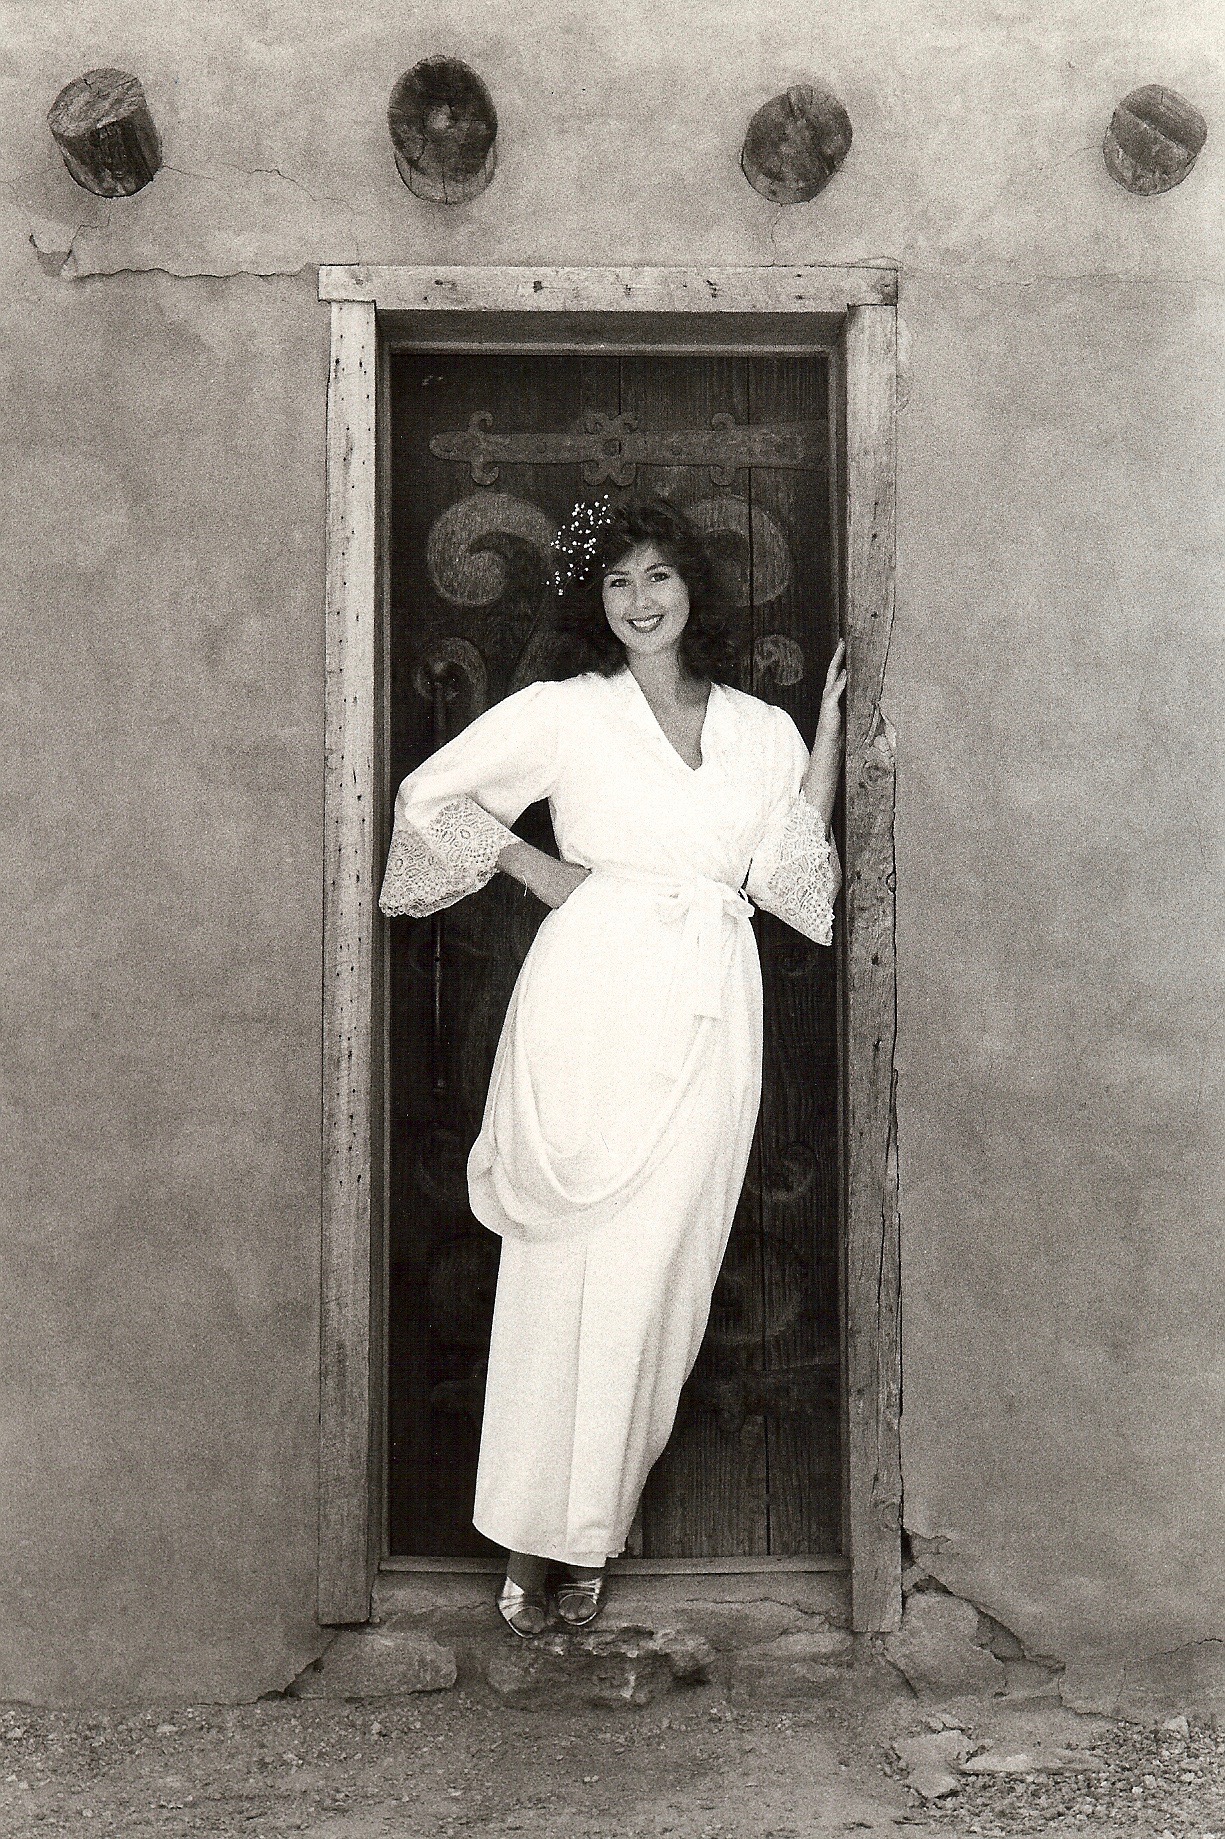 Julia King Photographs - fashion, advertising, portrait, fine art, New York City and Santa Fe, New Mexico, 1980s